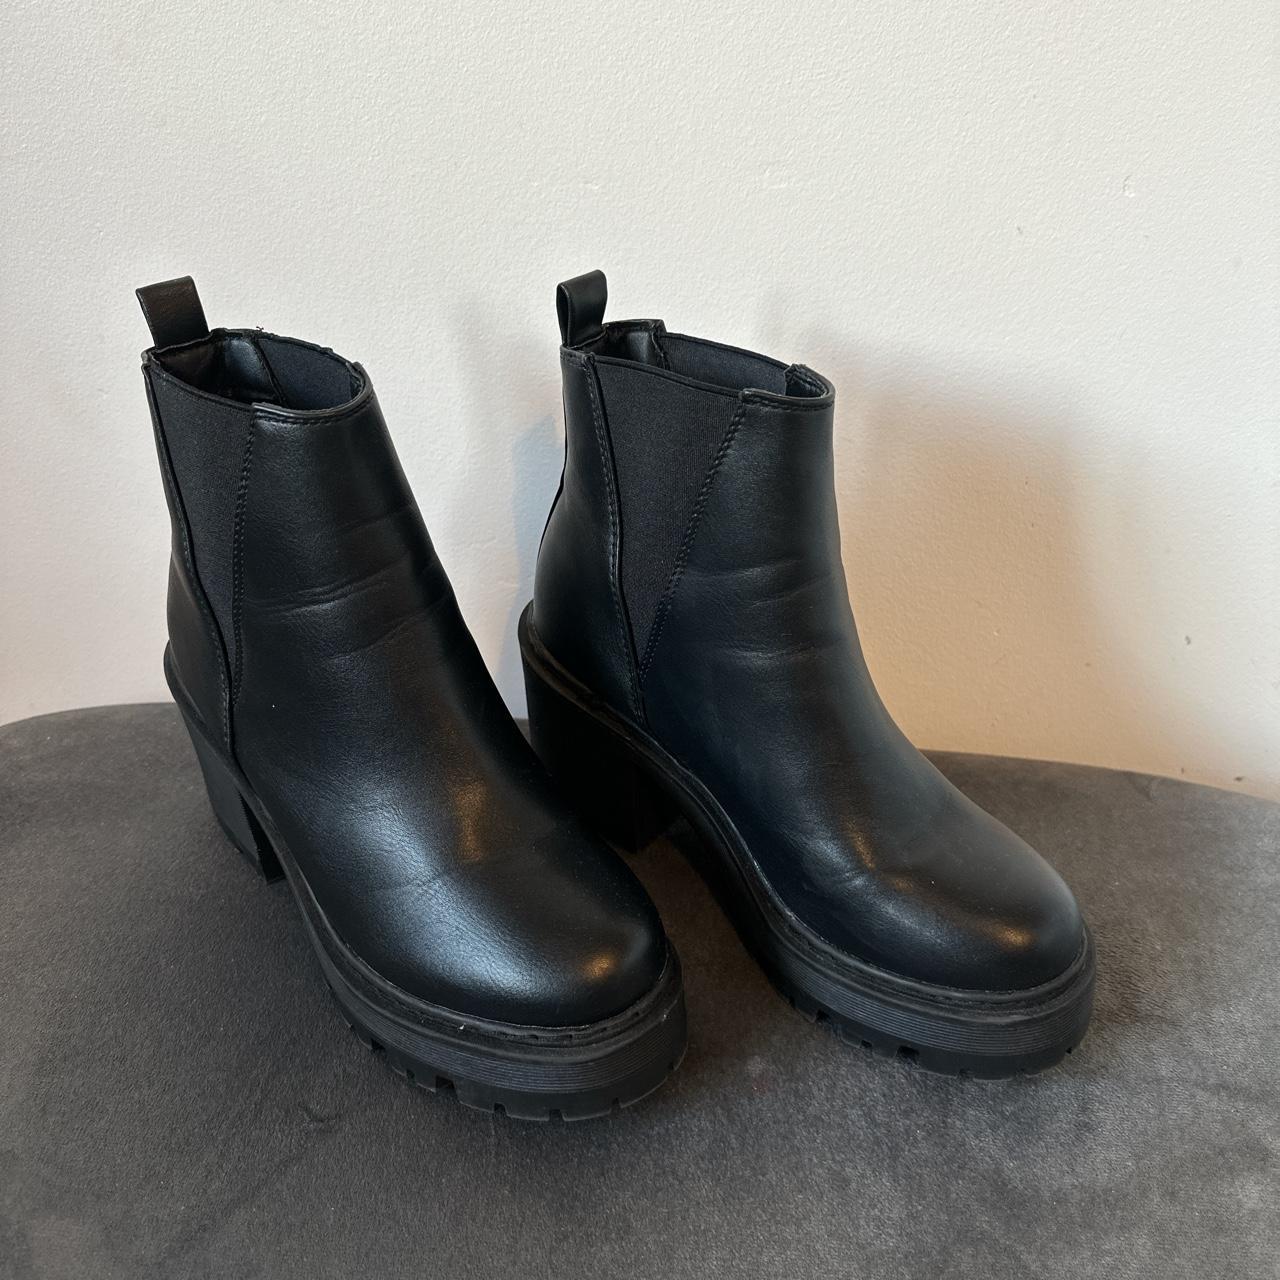 Black boots - Depop